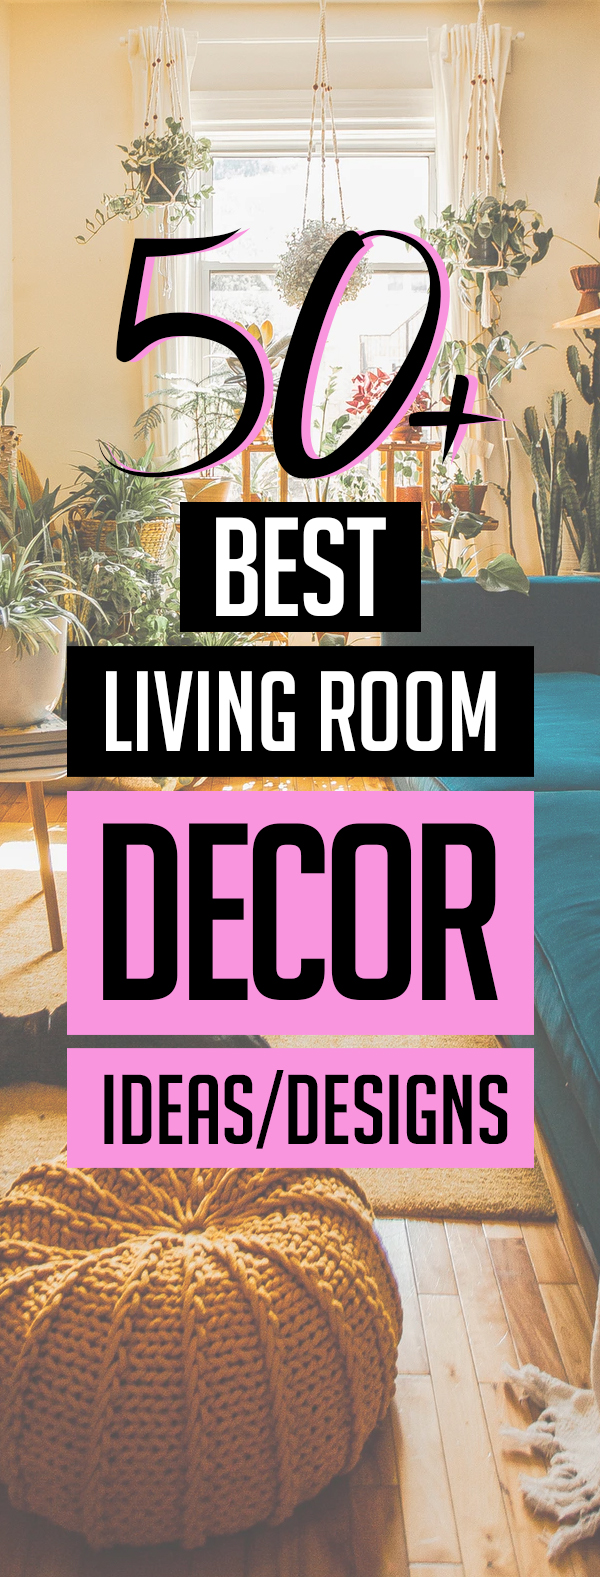 50+ Best Living Room Décor Ideas & Designs